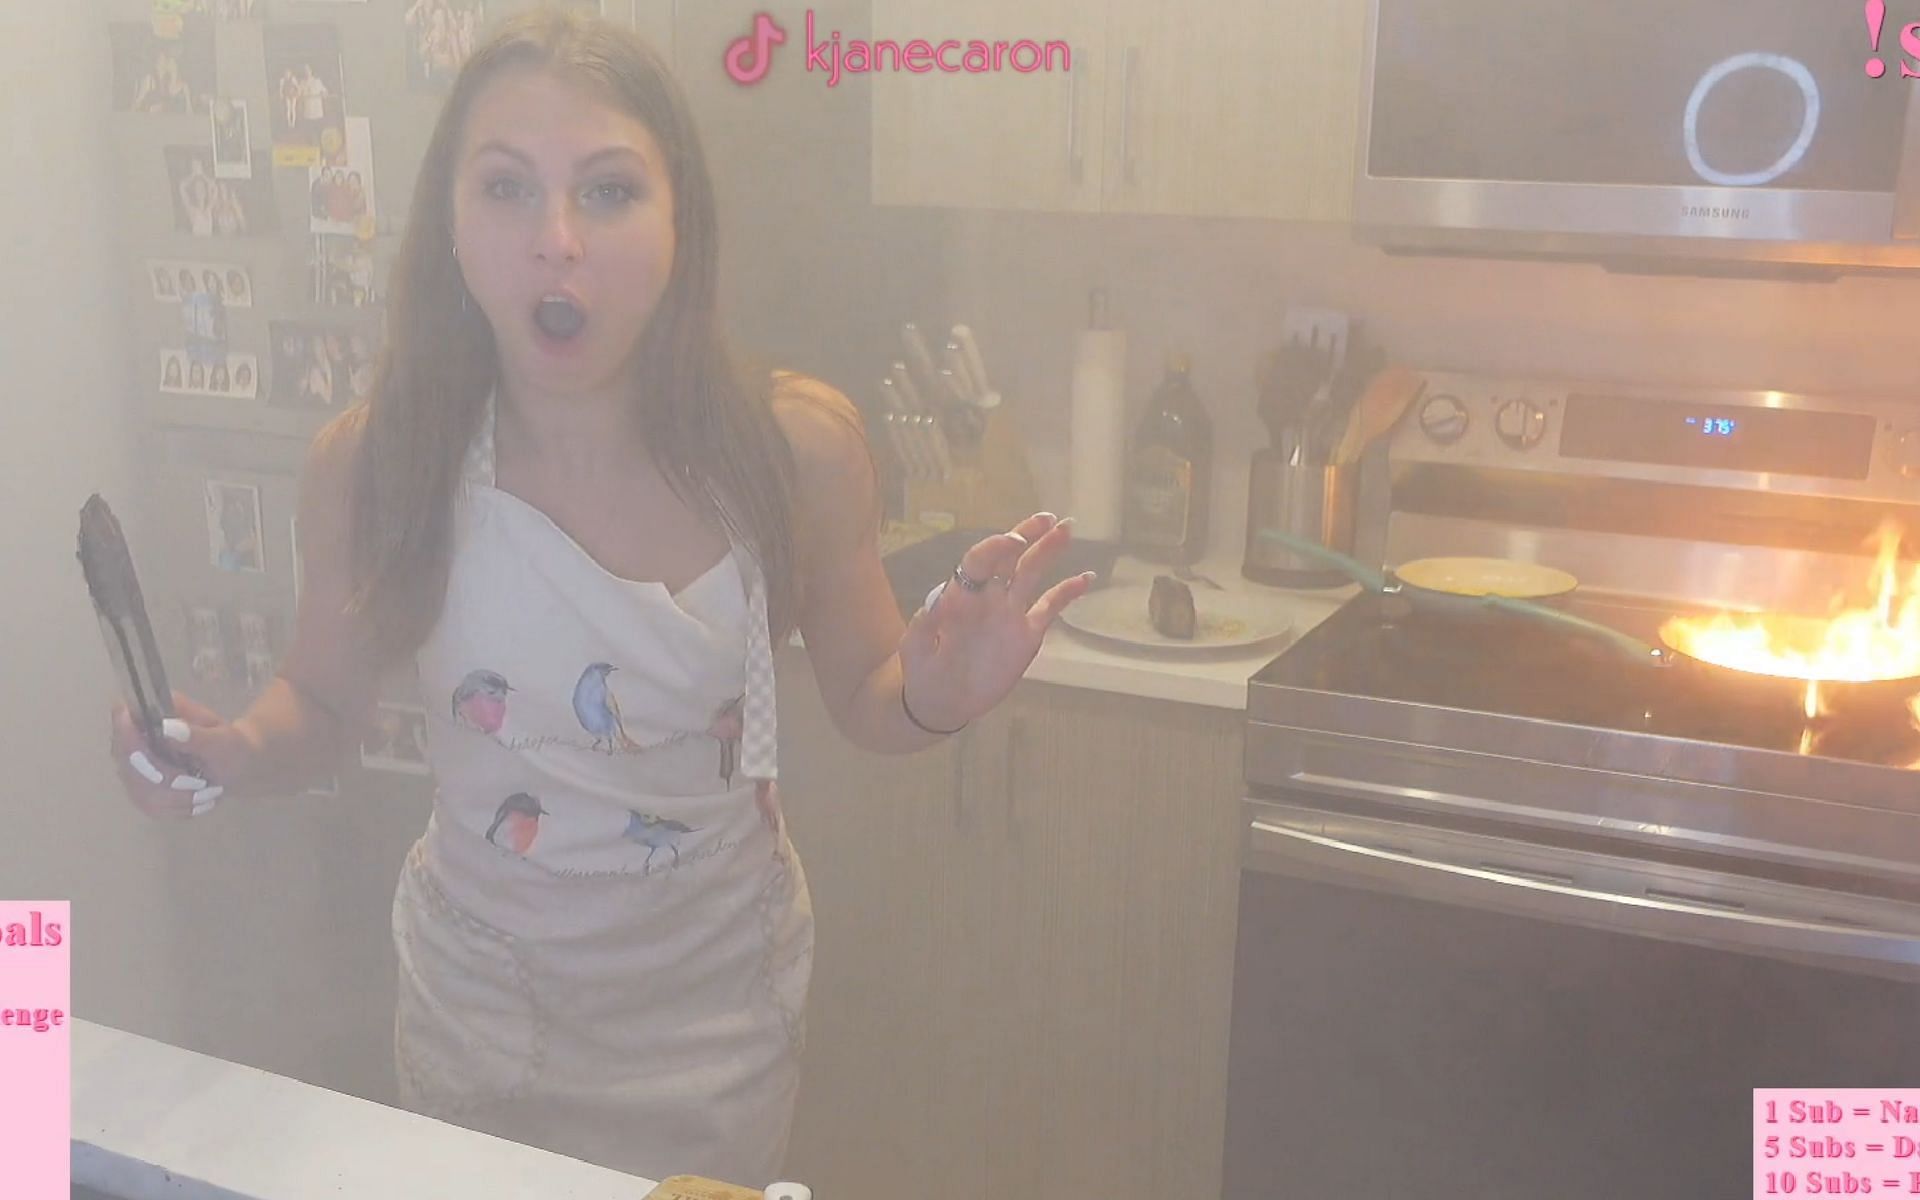 Twitch streamer kjanecaron sets her kitchen on fire during a subathon stream (Image via kjanecaron/Twitch)